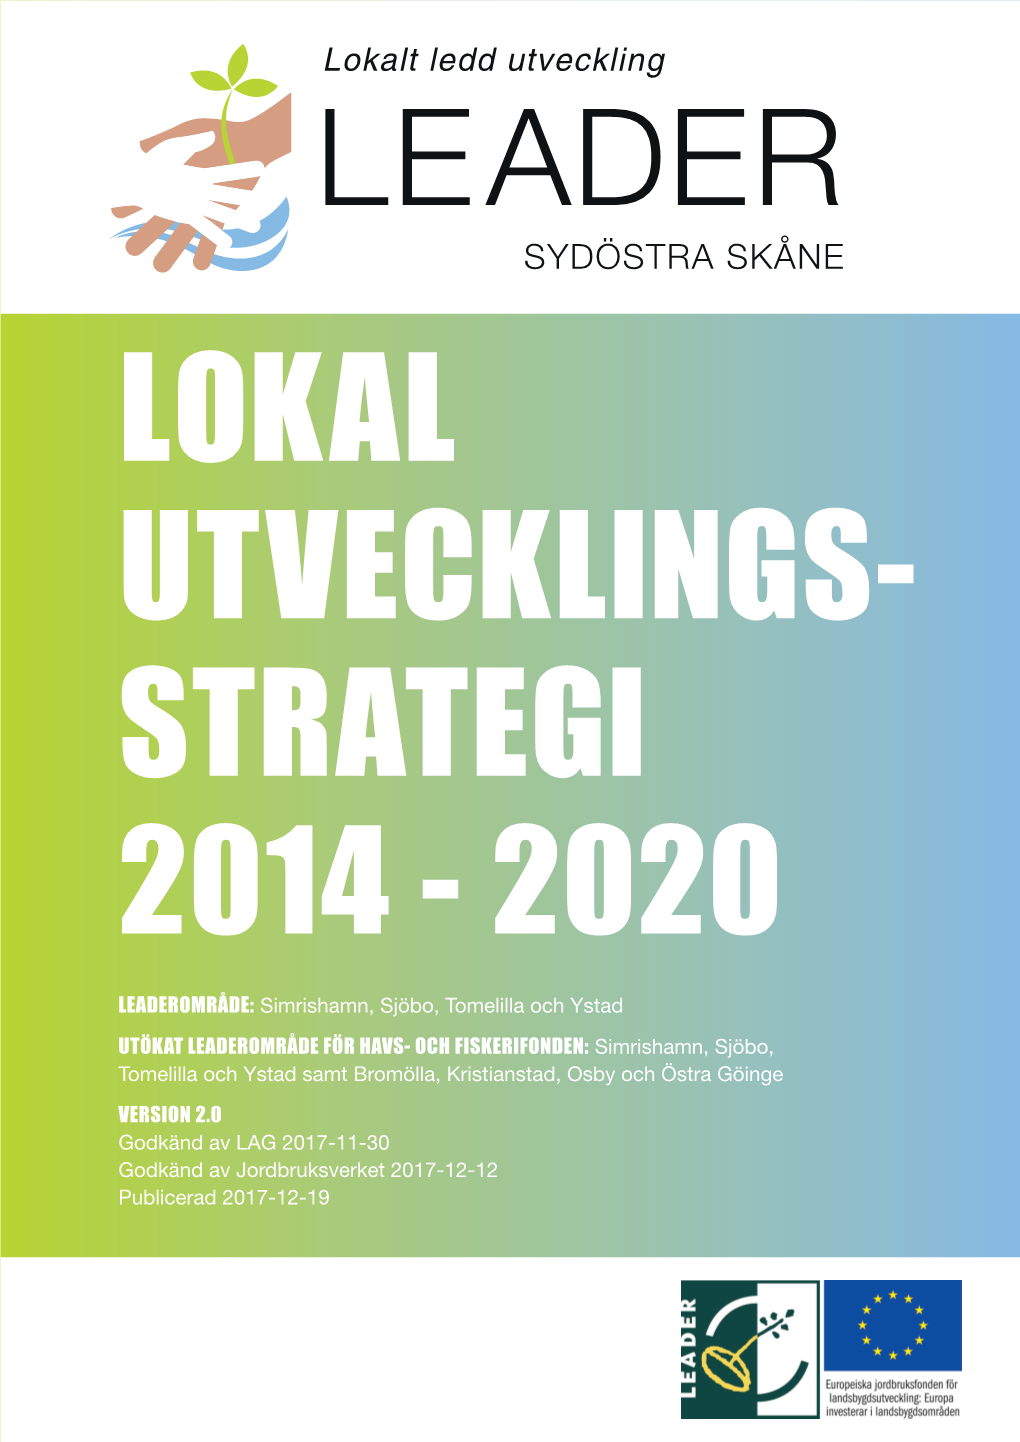 Lokal Utvecklings- Strategi 2014